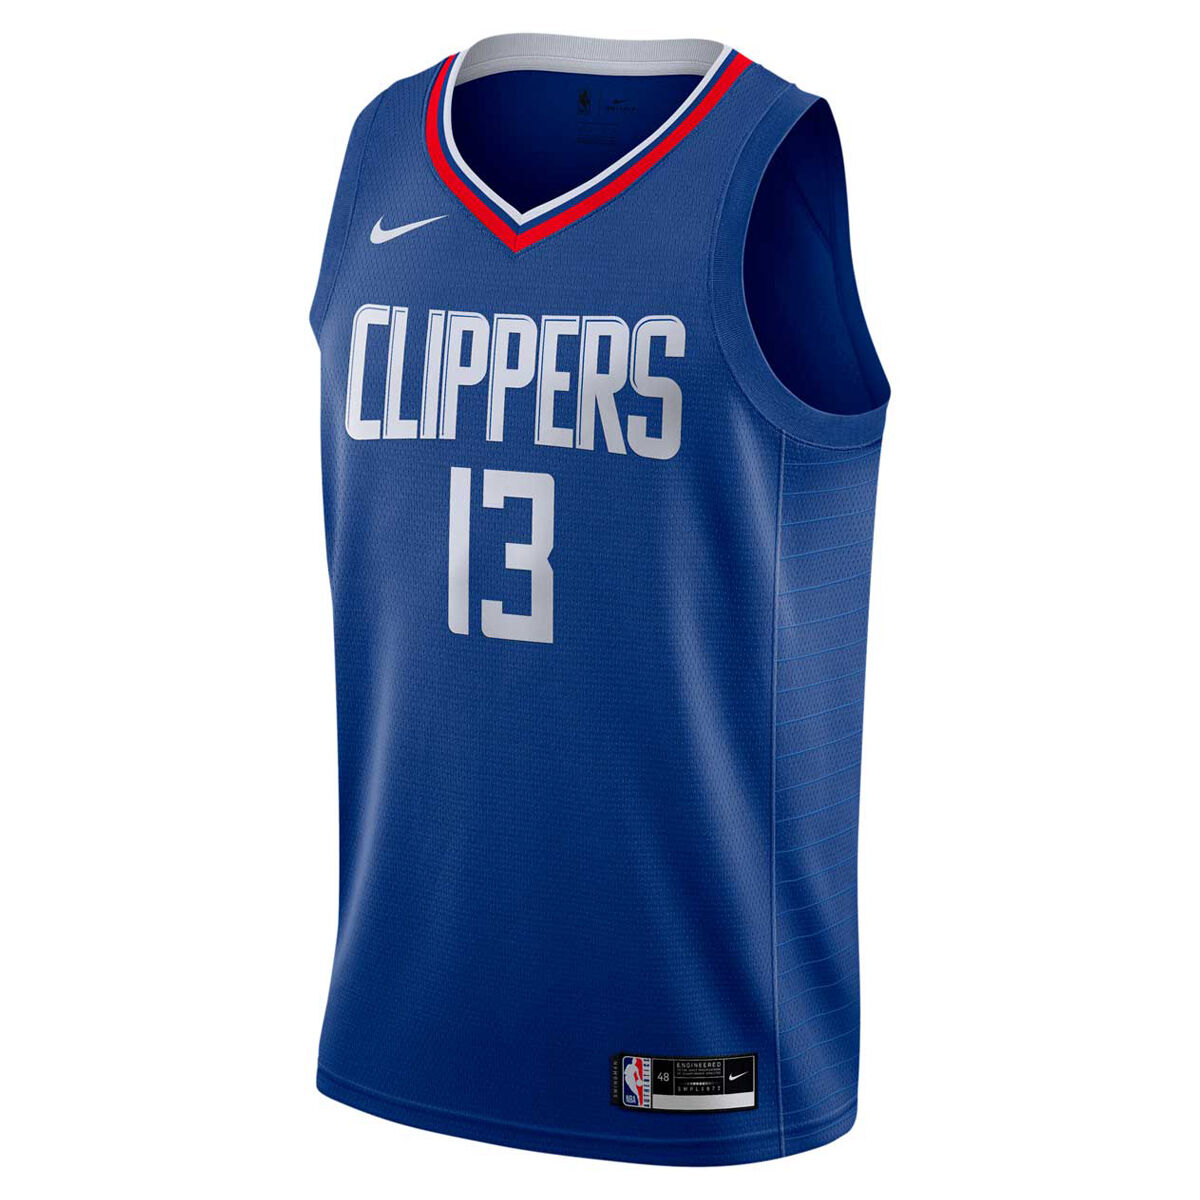 Los Angeles Clippers Merchandise - rebel